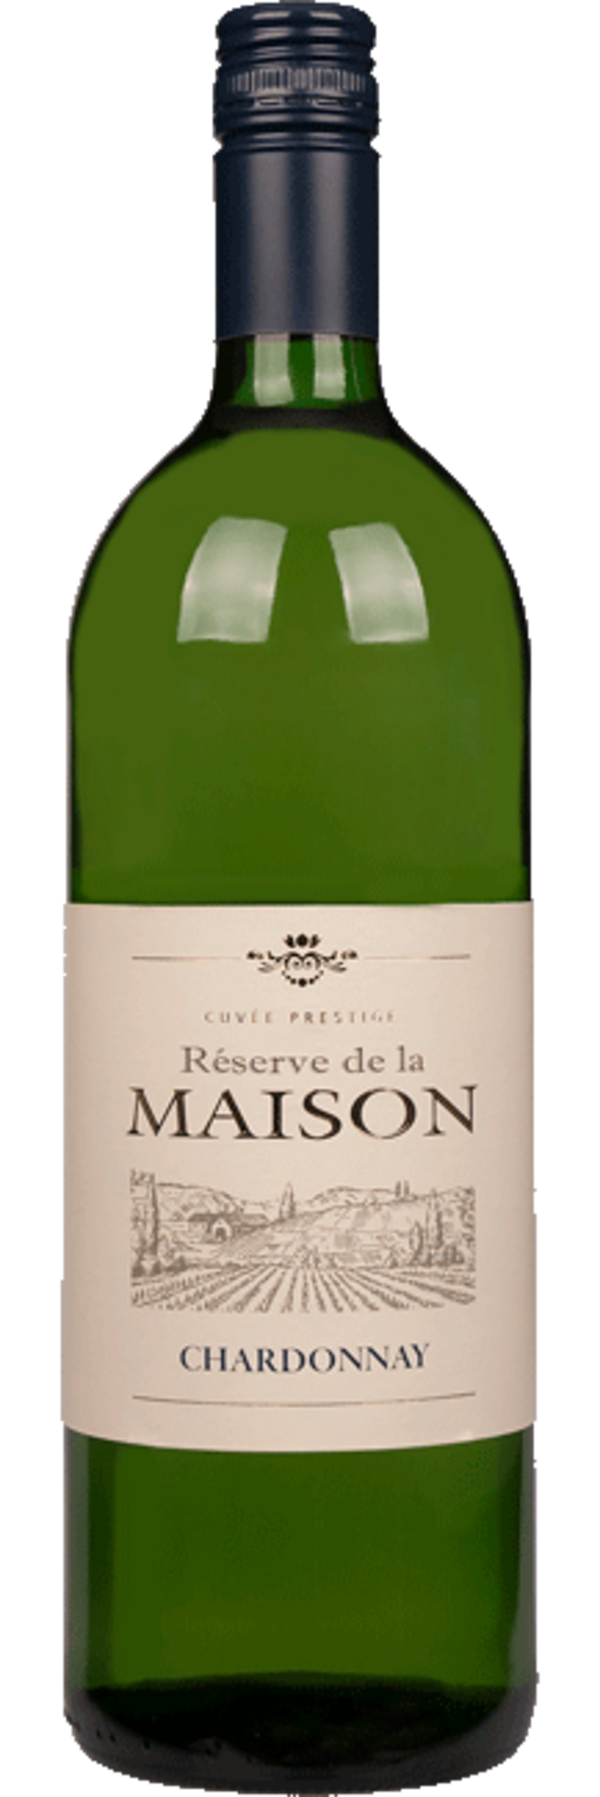 Reserve de la Maison Chardonnay, Huiswijn